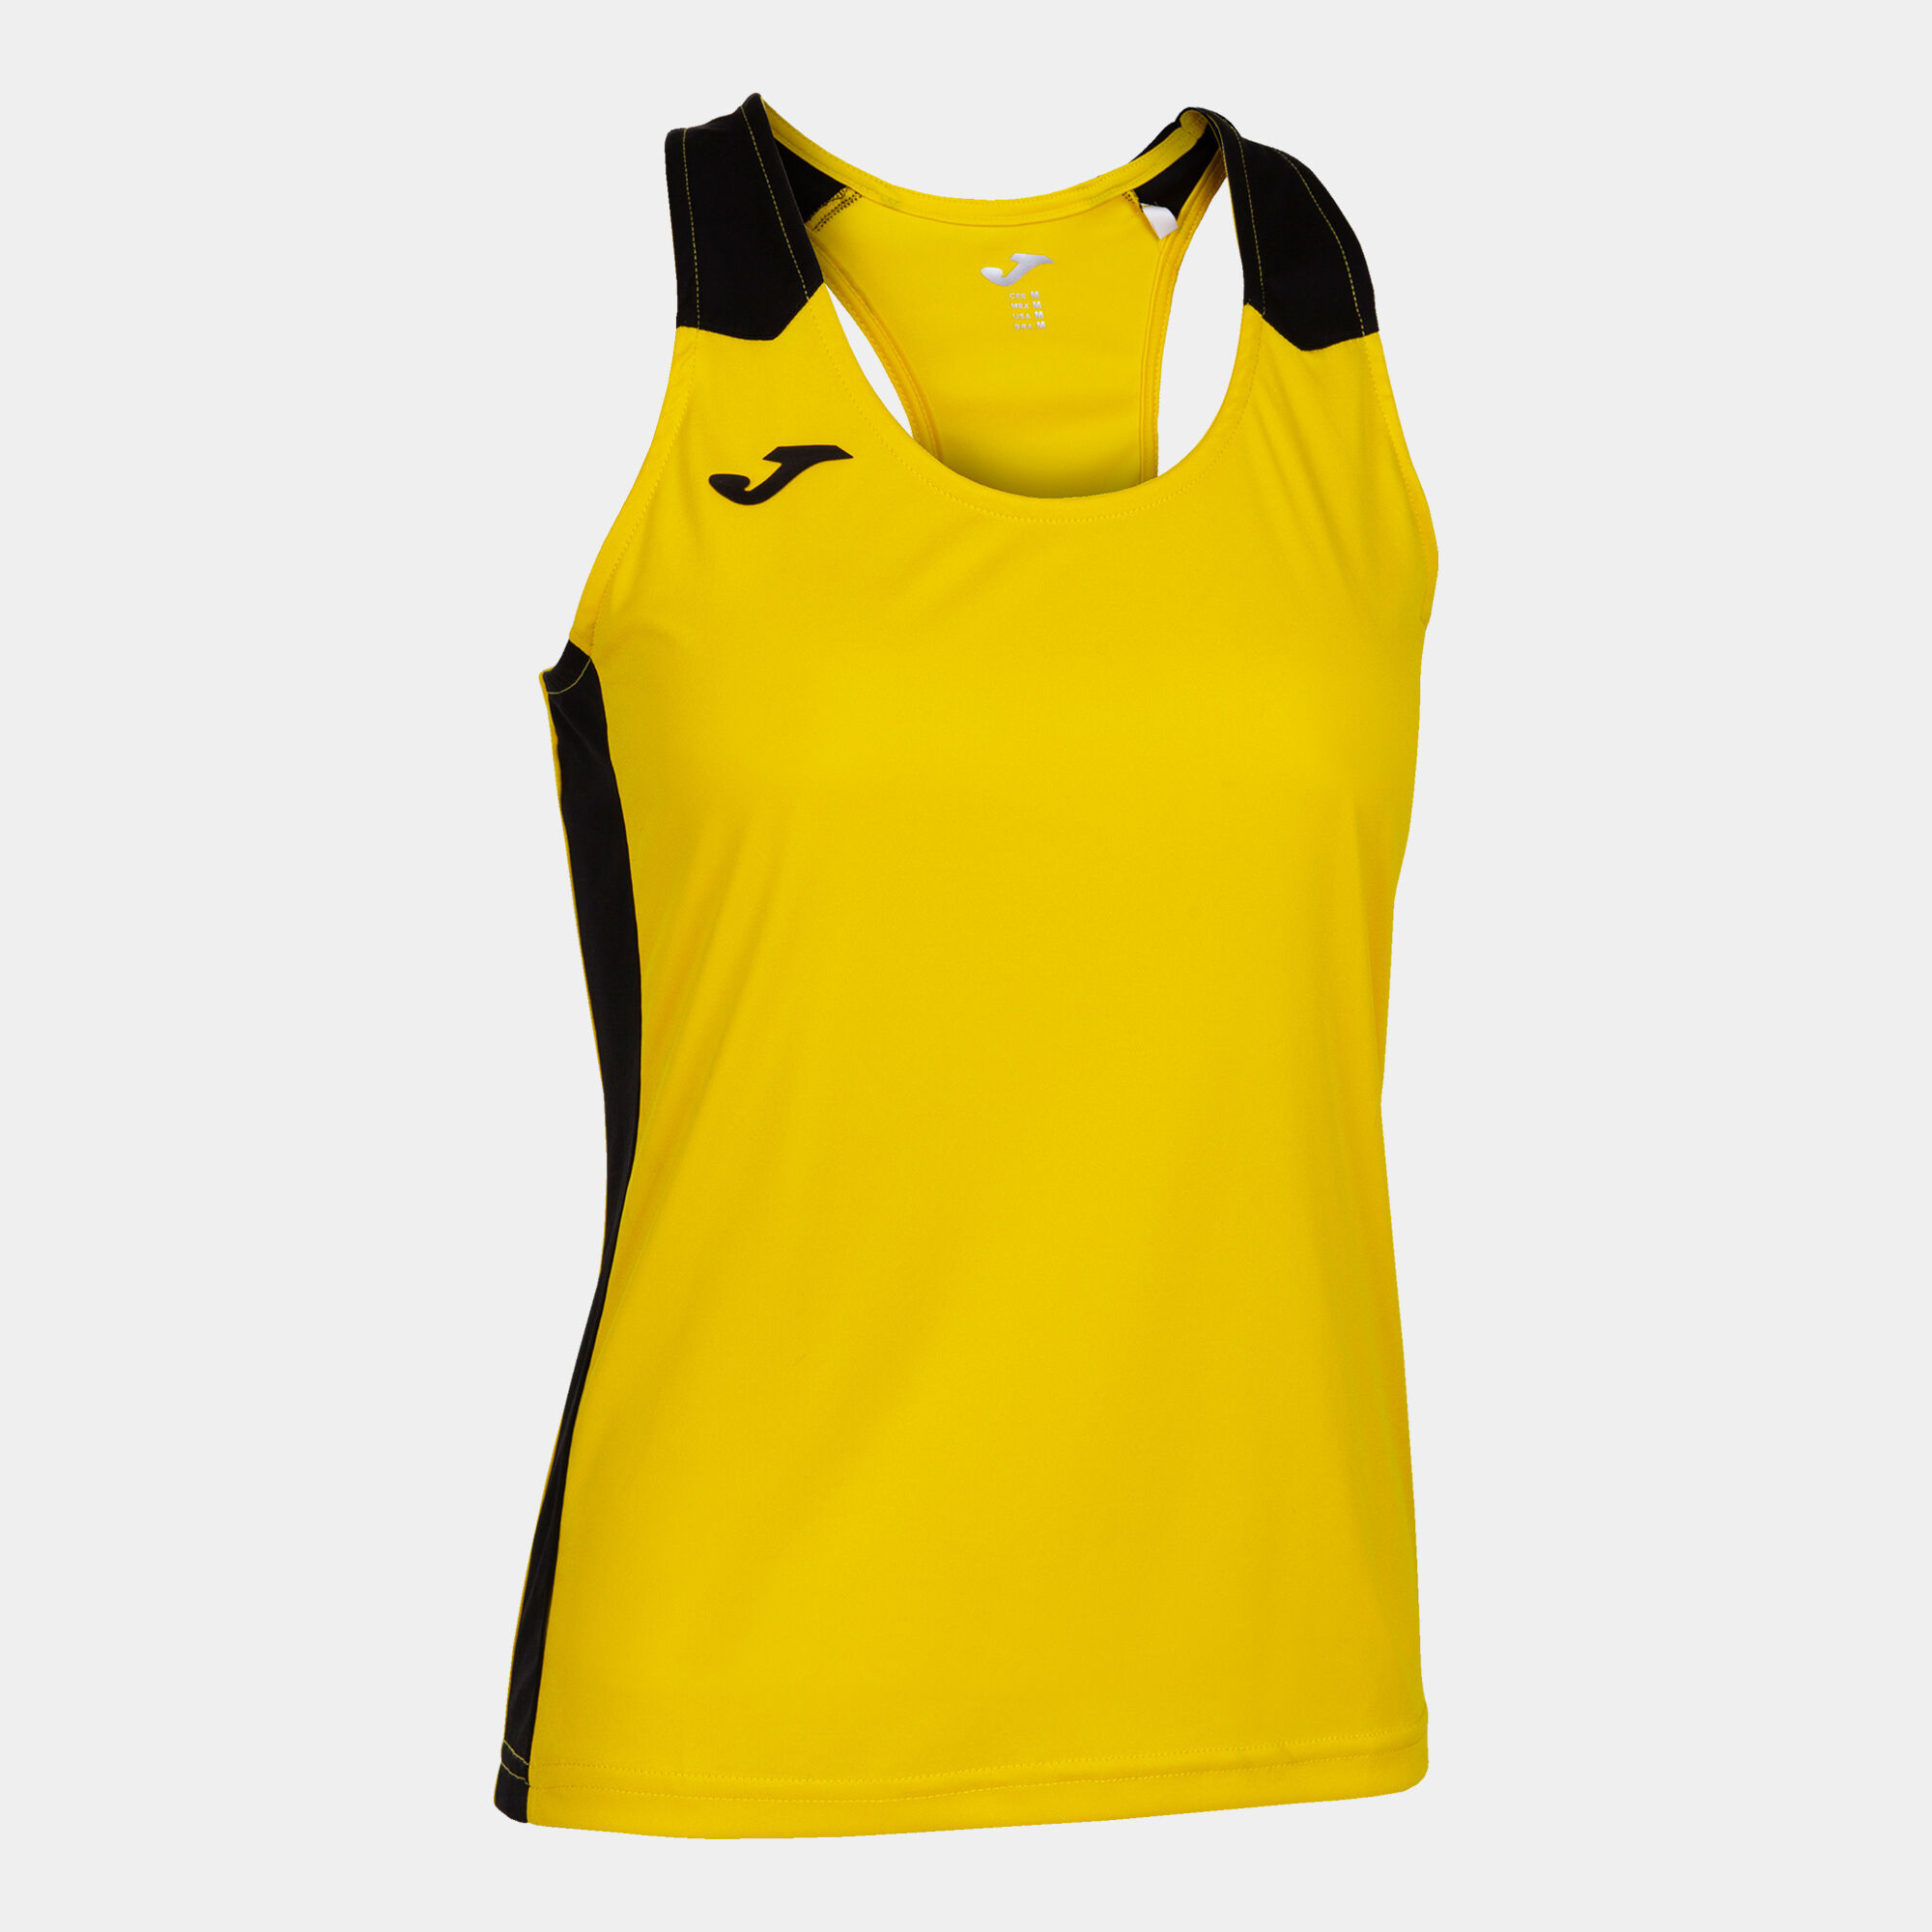 Camiseta tirantes mujer Record II amarillo negro